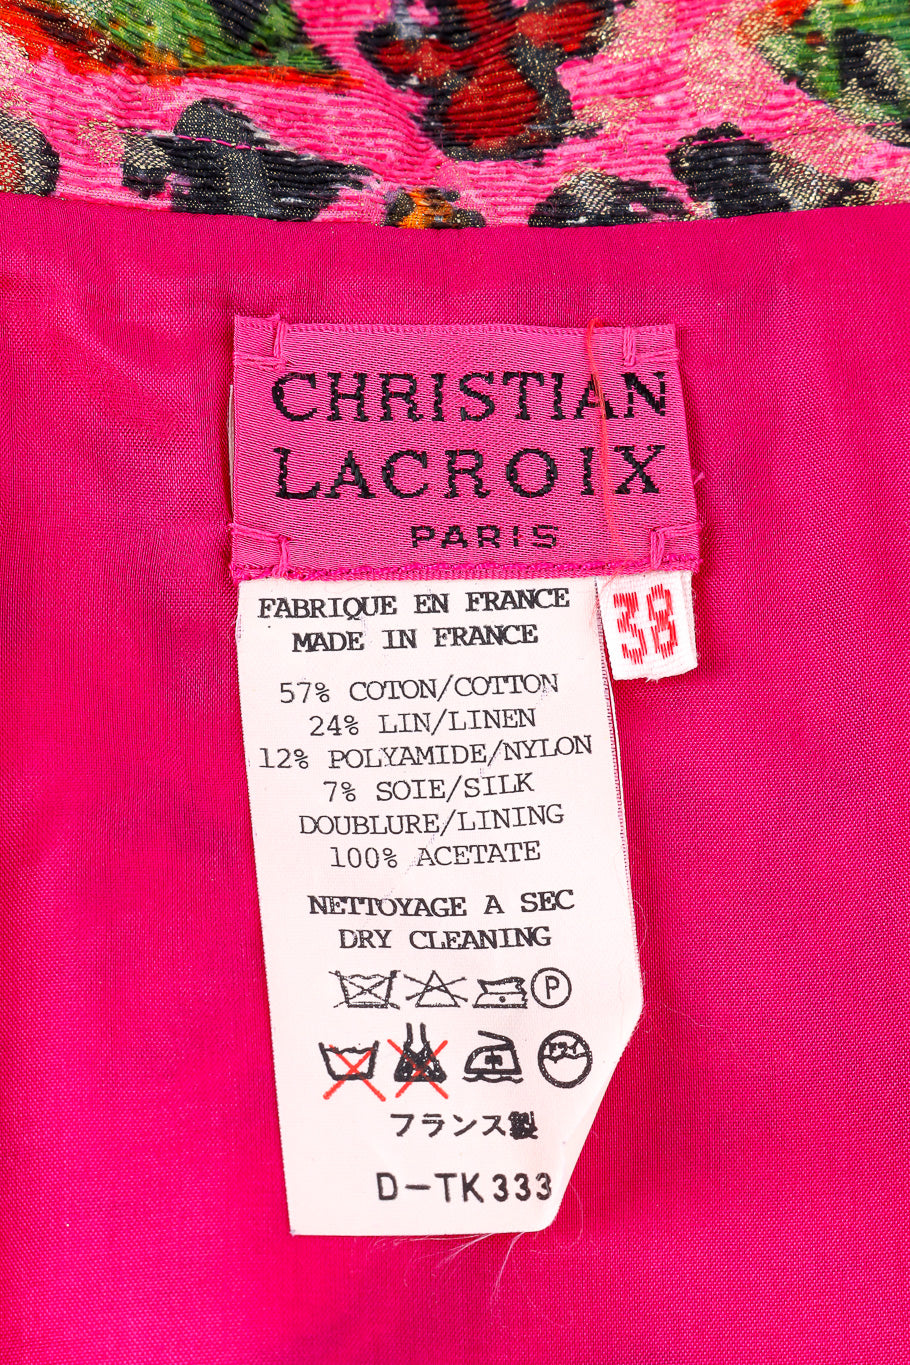 Vintage Christian Lacroix Abstract Print Skirt label closeup @Recessla